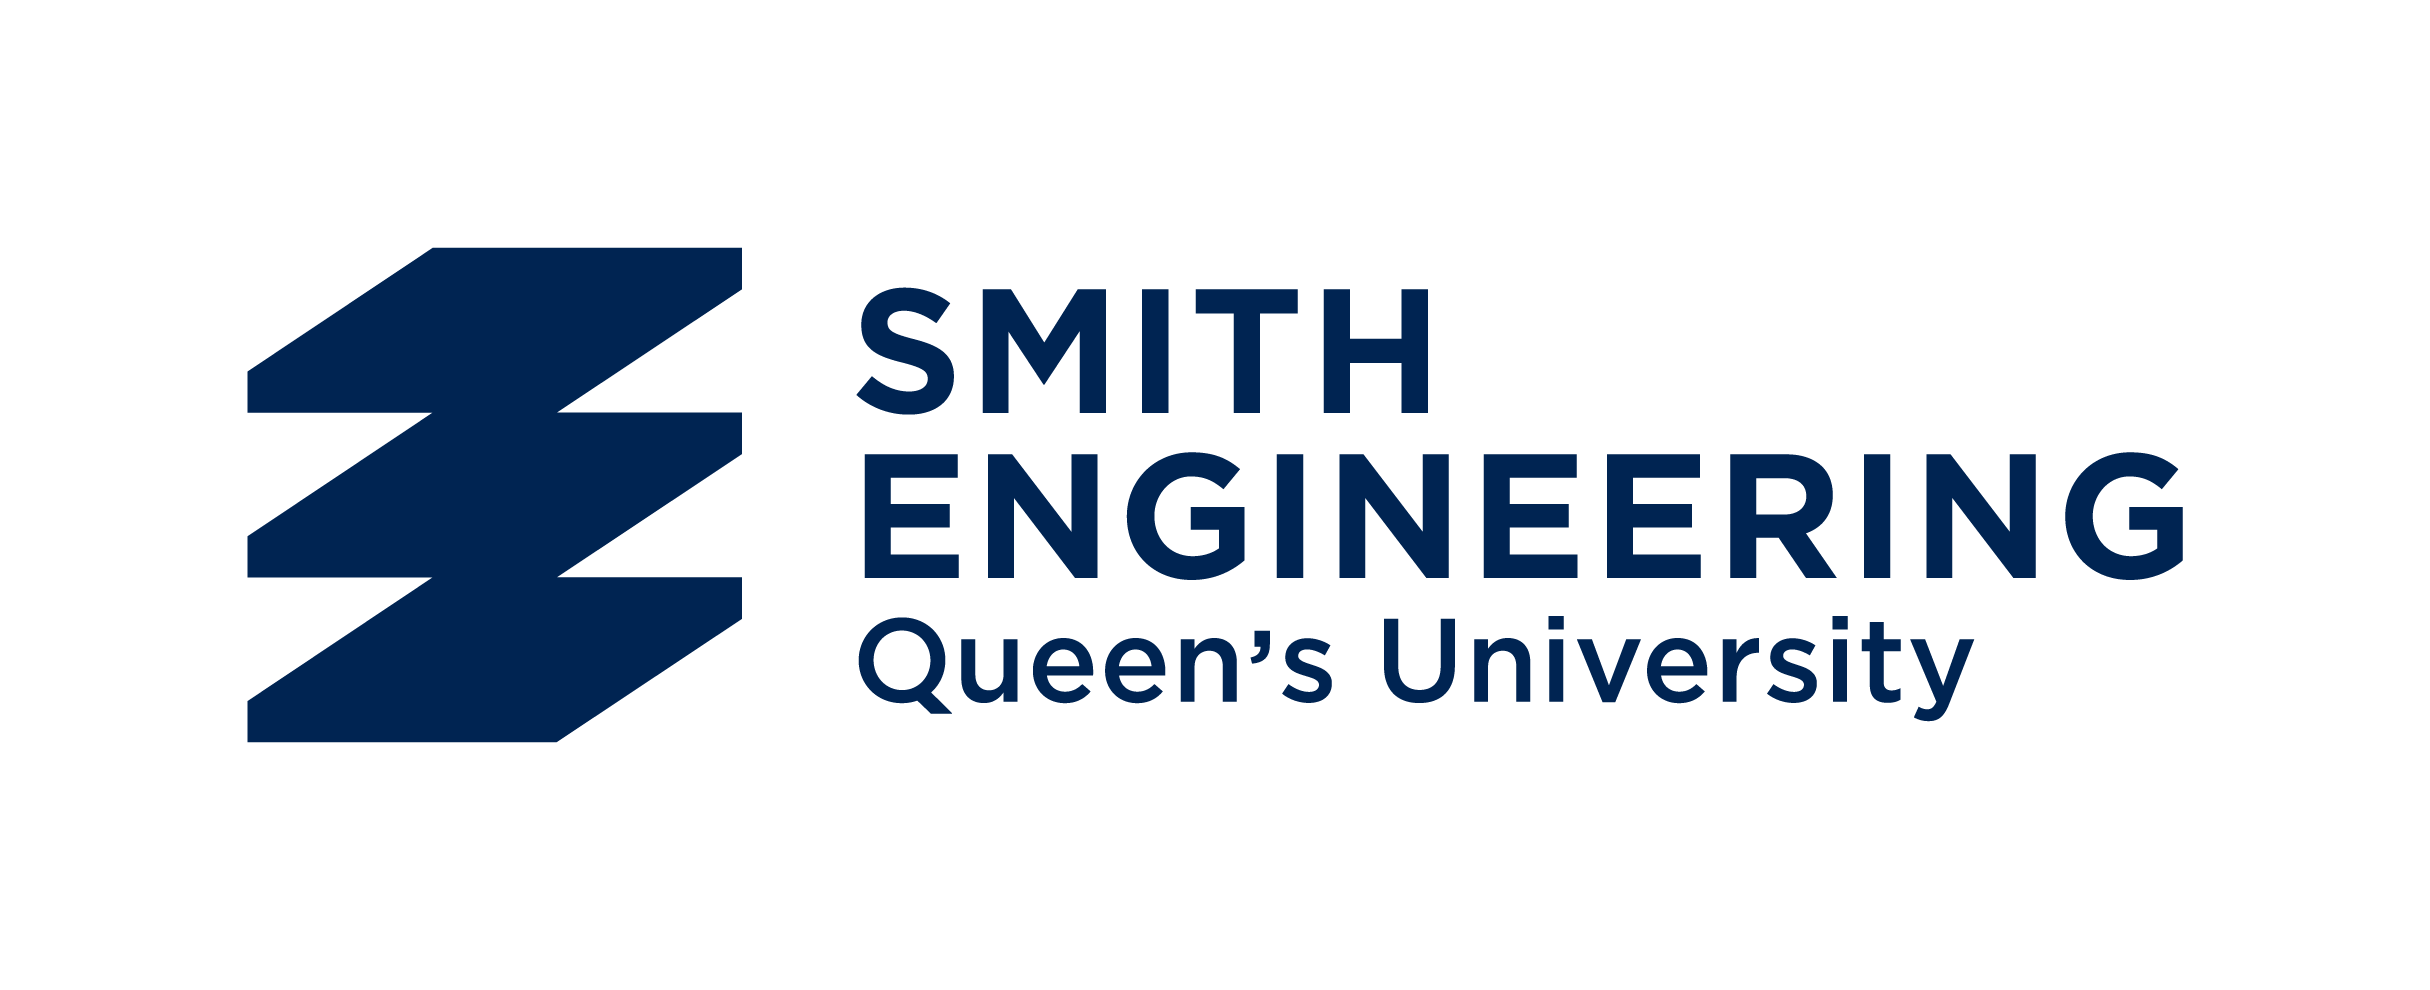 Smith engineering logo